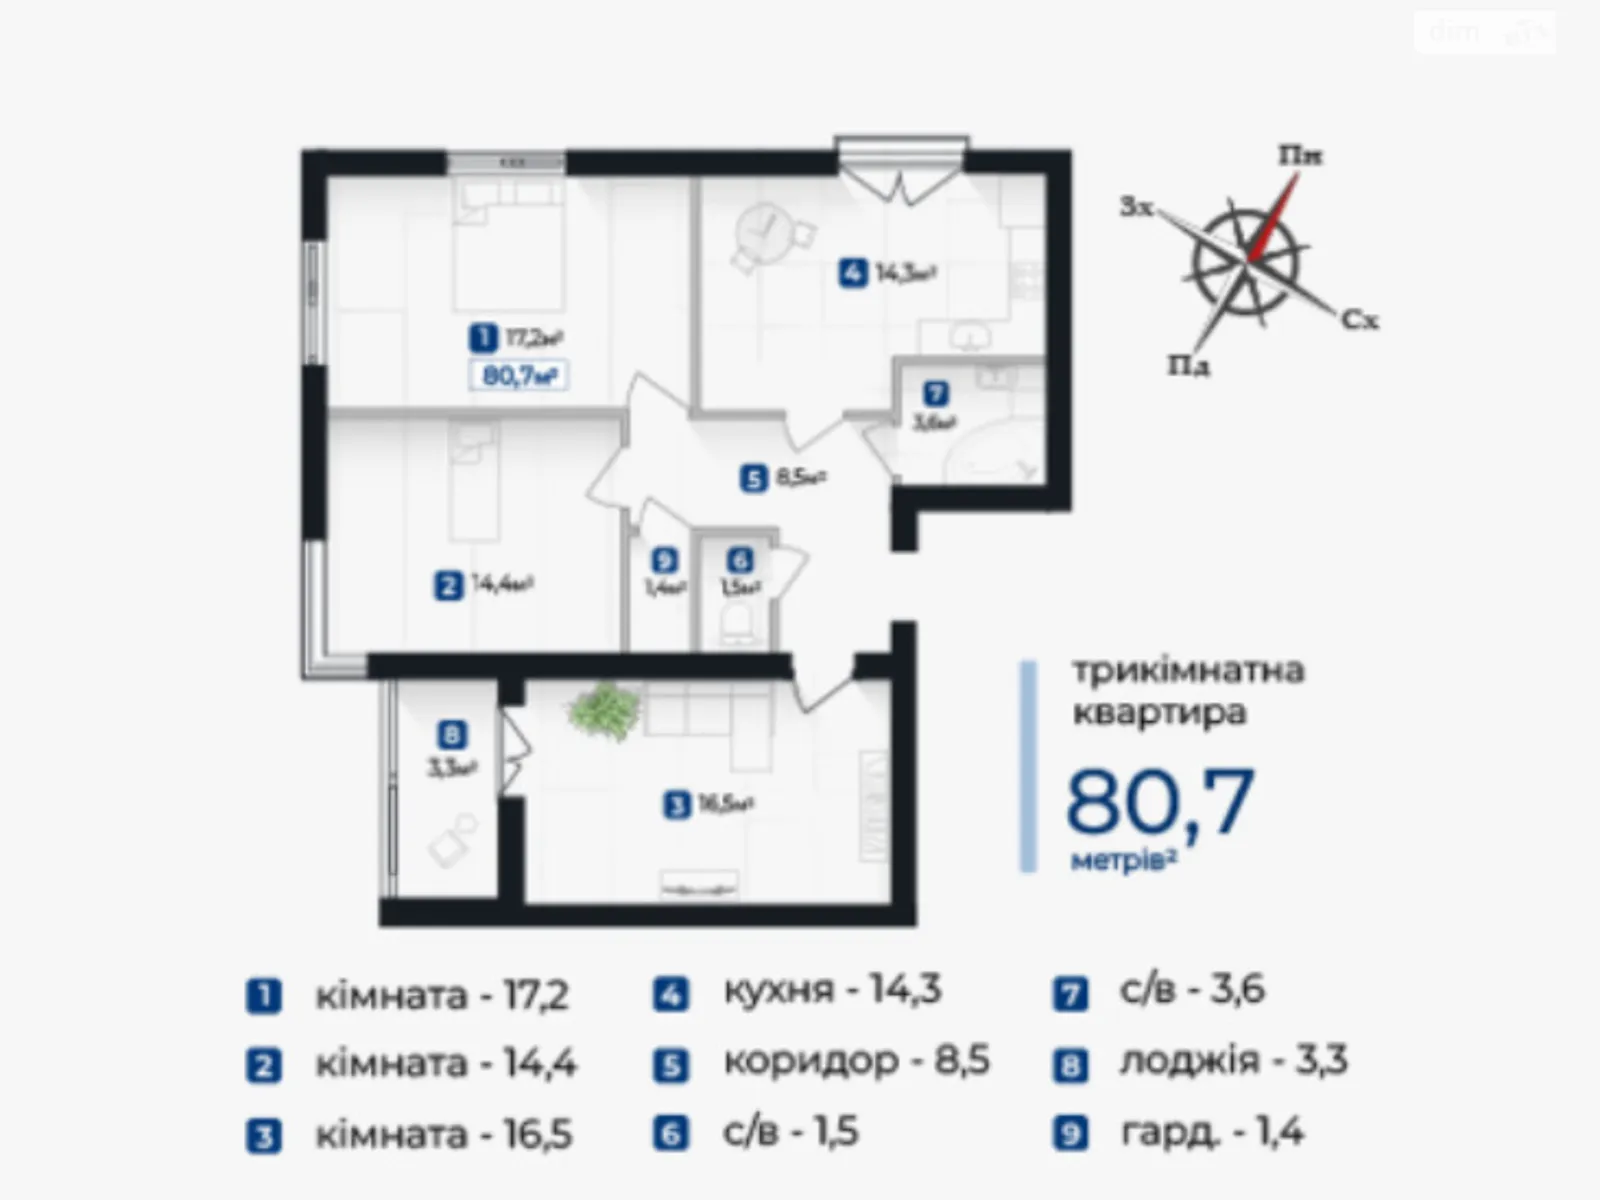 Продается 3-комнатная квартира 80.7 кв. м в Ивано-Франковске - фото 1